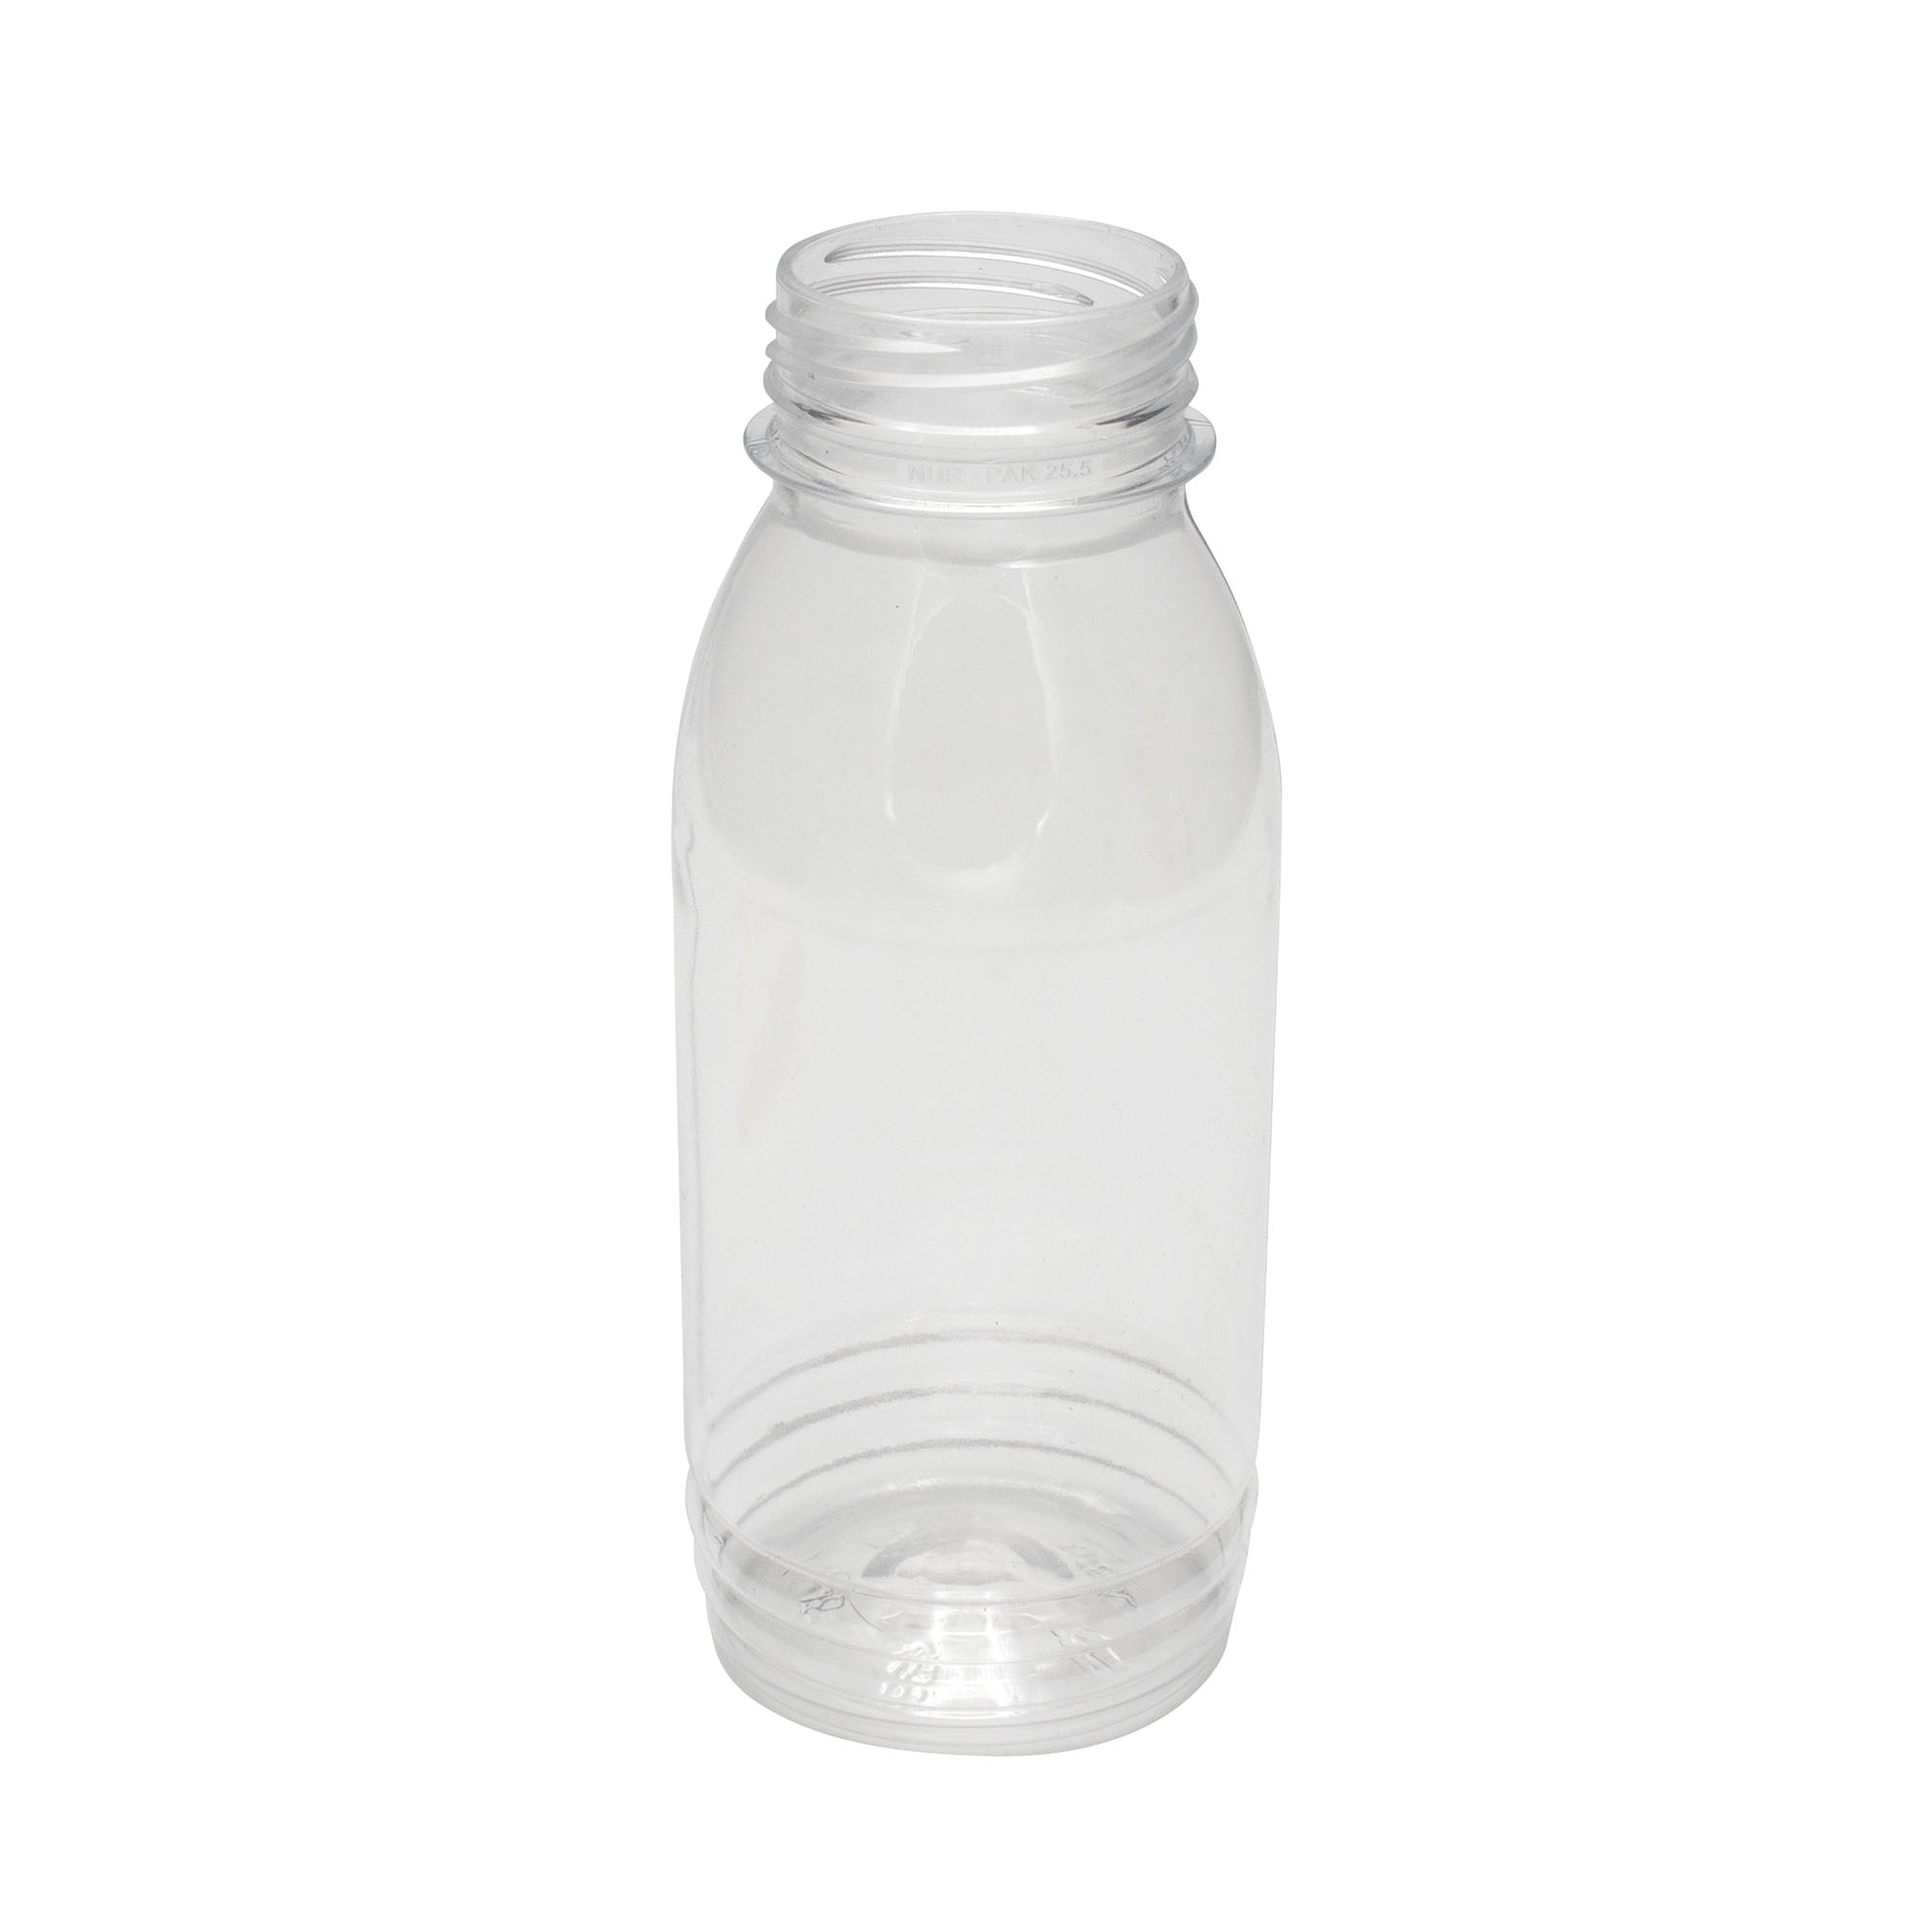 Бутылка ПЭТ прозрачная 0.25 л, горло 38 мм, с нижним ребром жесткости, БЕЗ КРЫШКИ